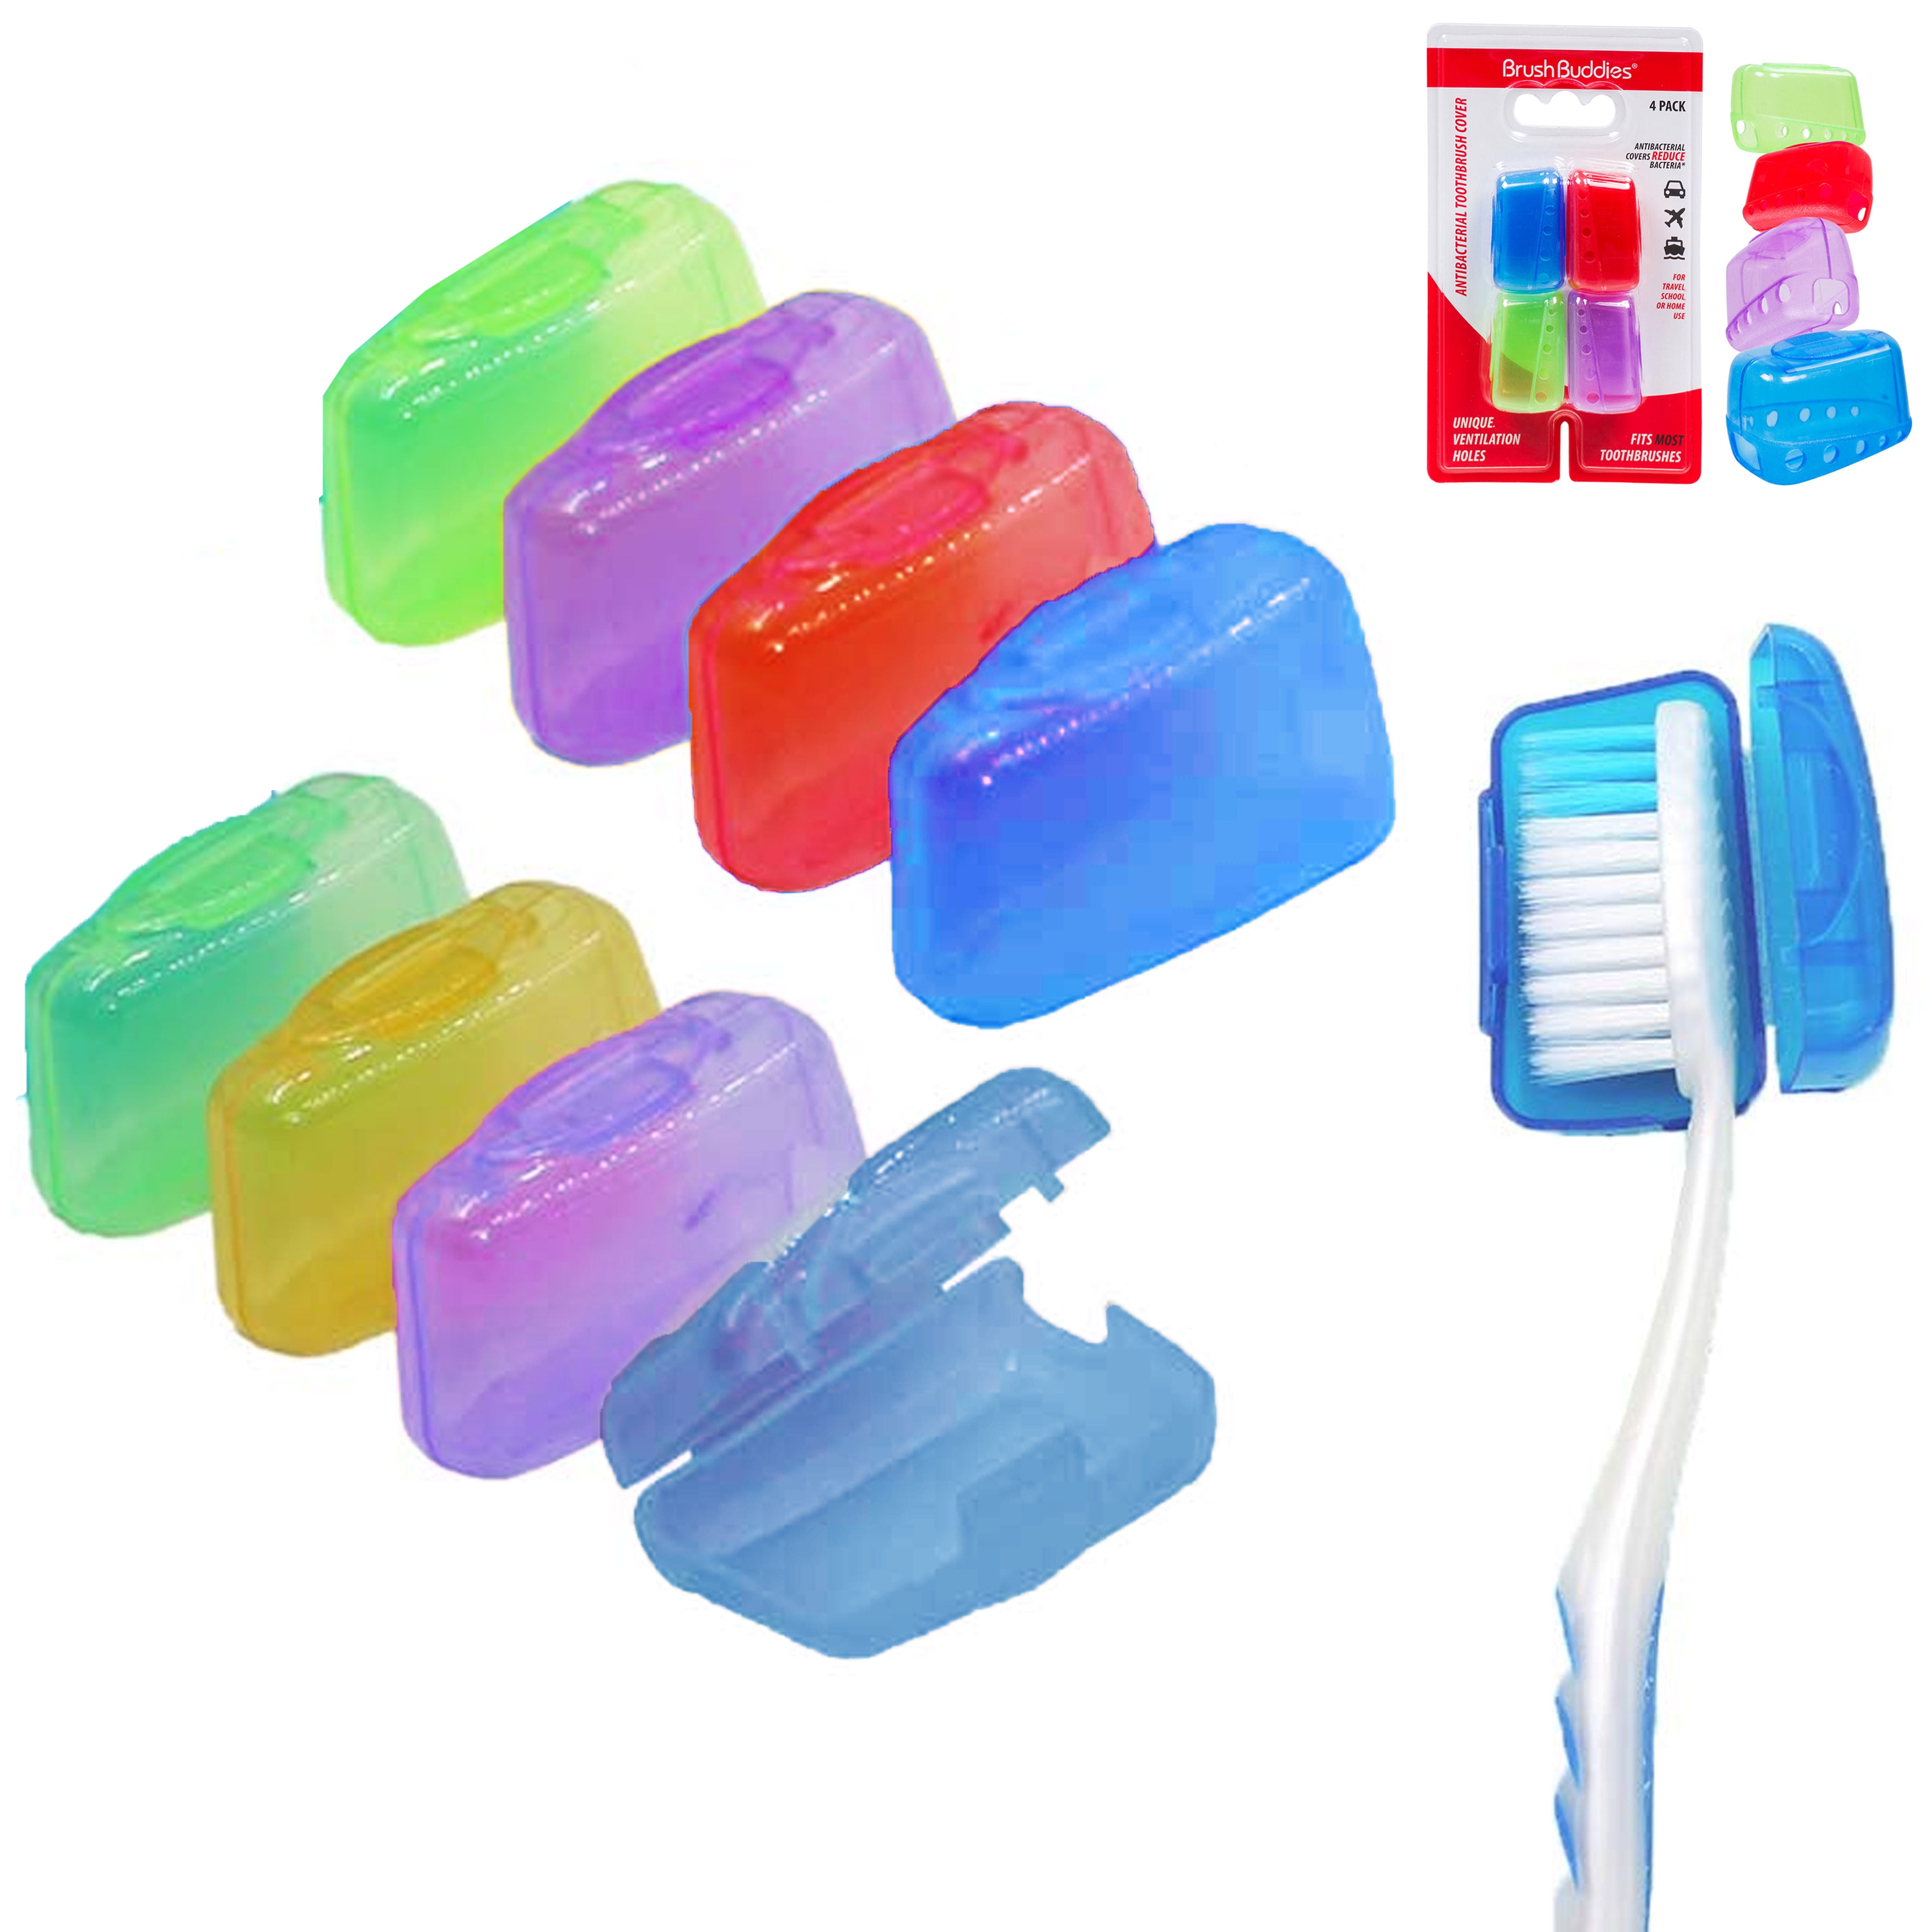 4 x Toothbrush Case Travel Cover ~ Plastic Holder Family Pack Brushes Holidays 